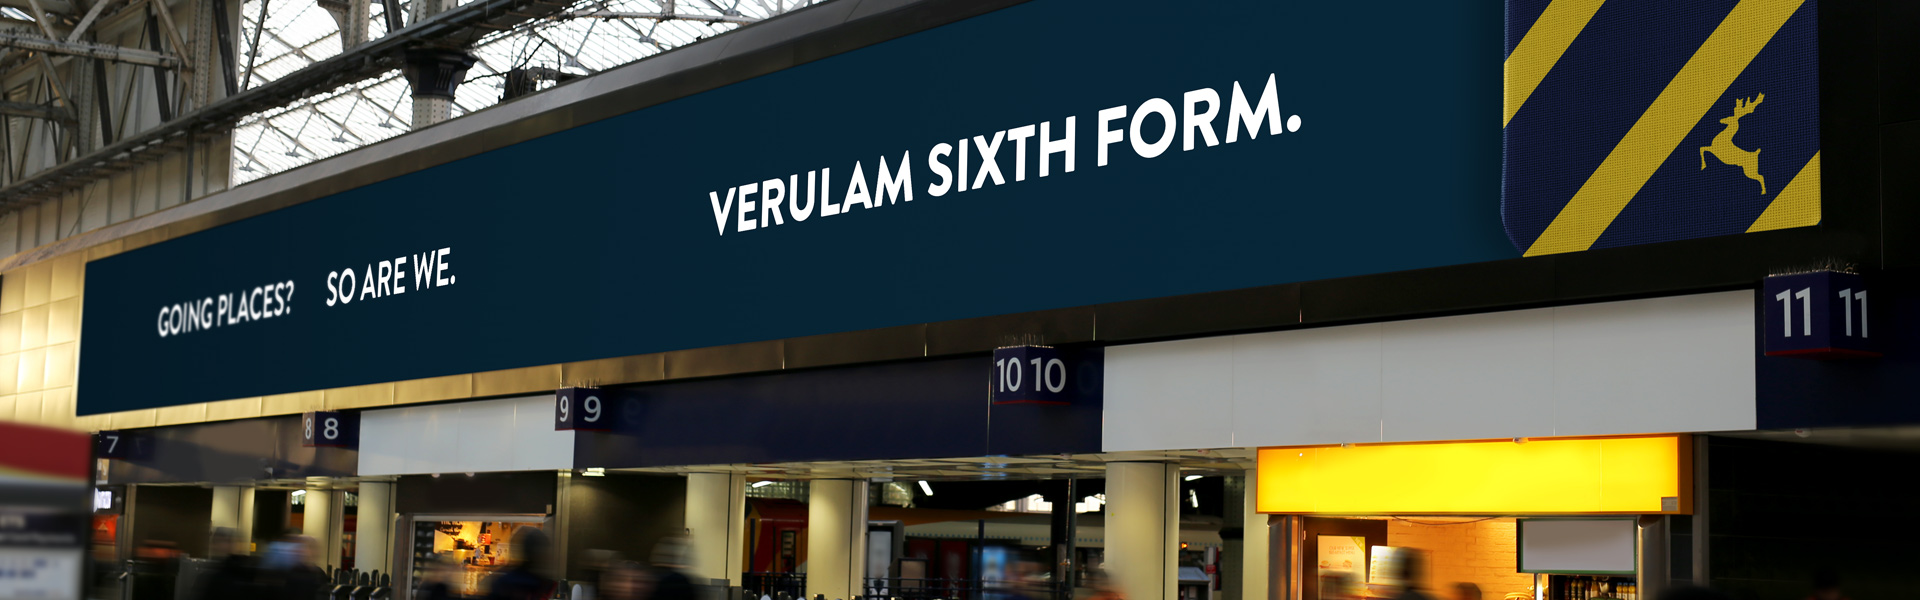 large billboard in railway station advertising verulam sixth form